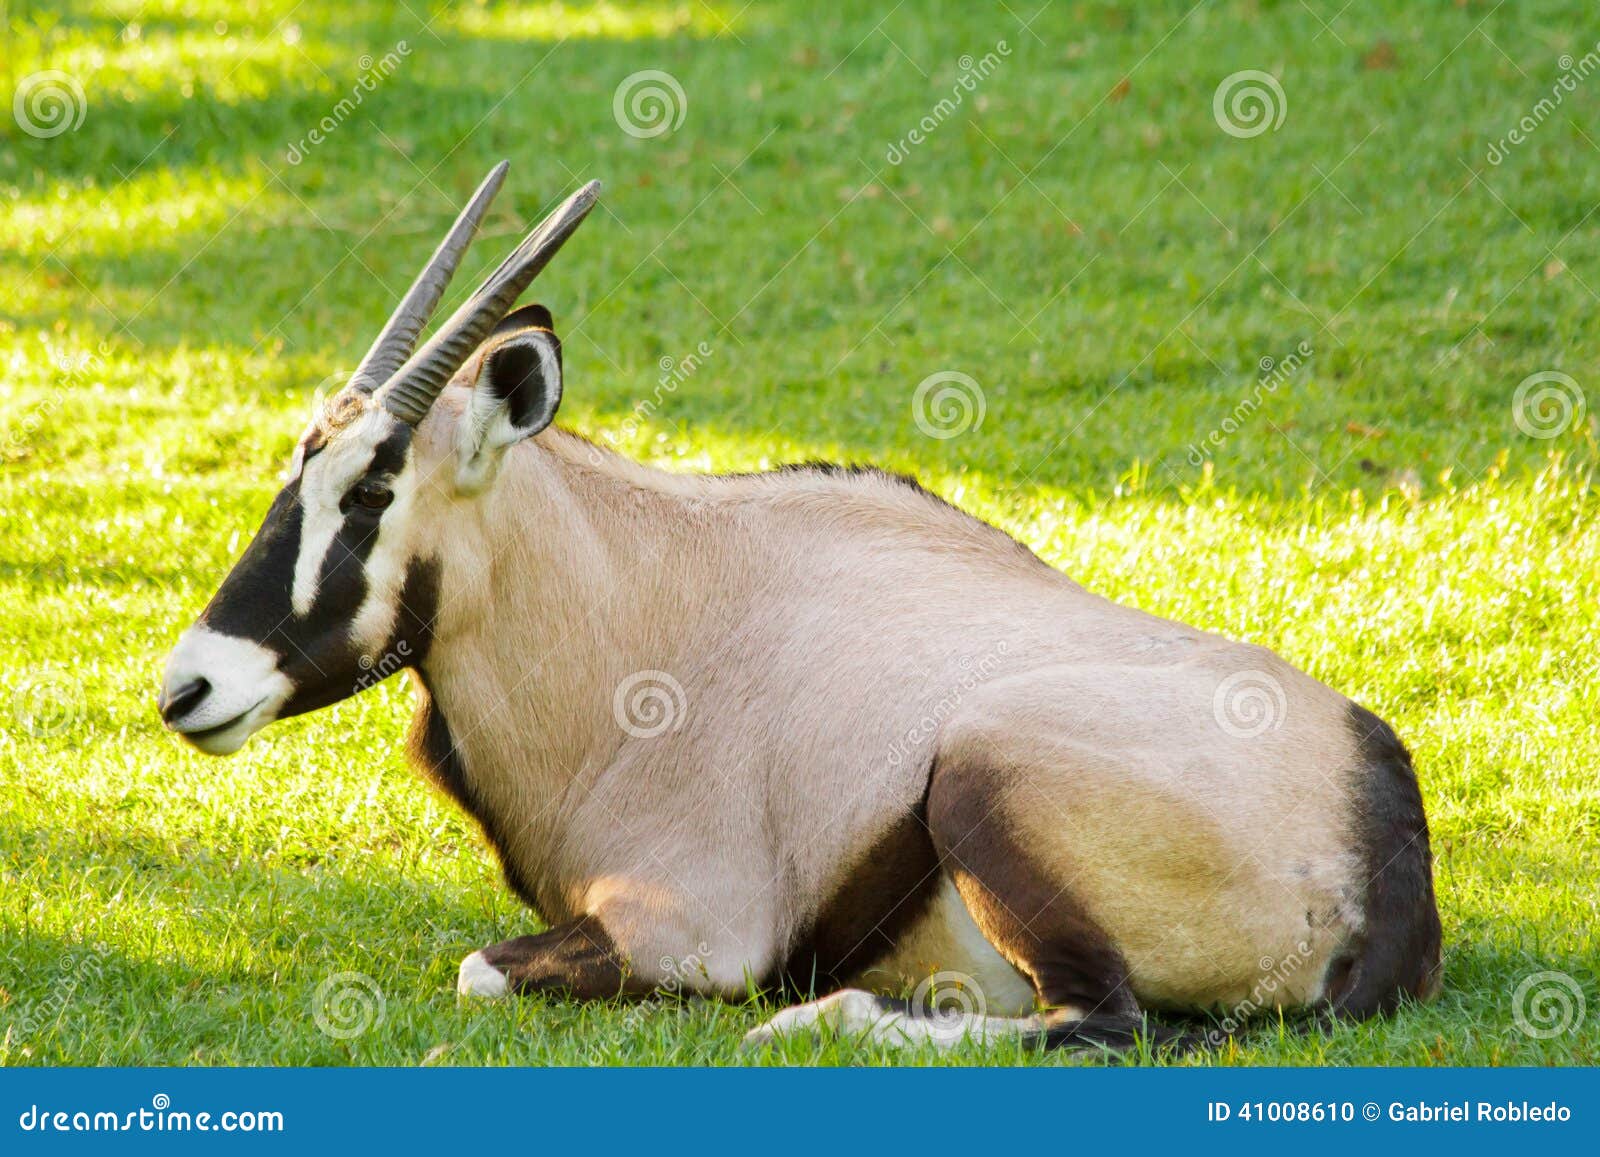 oryx gazelle